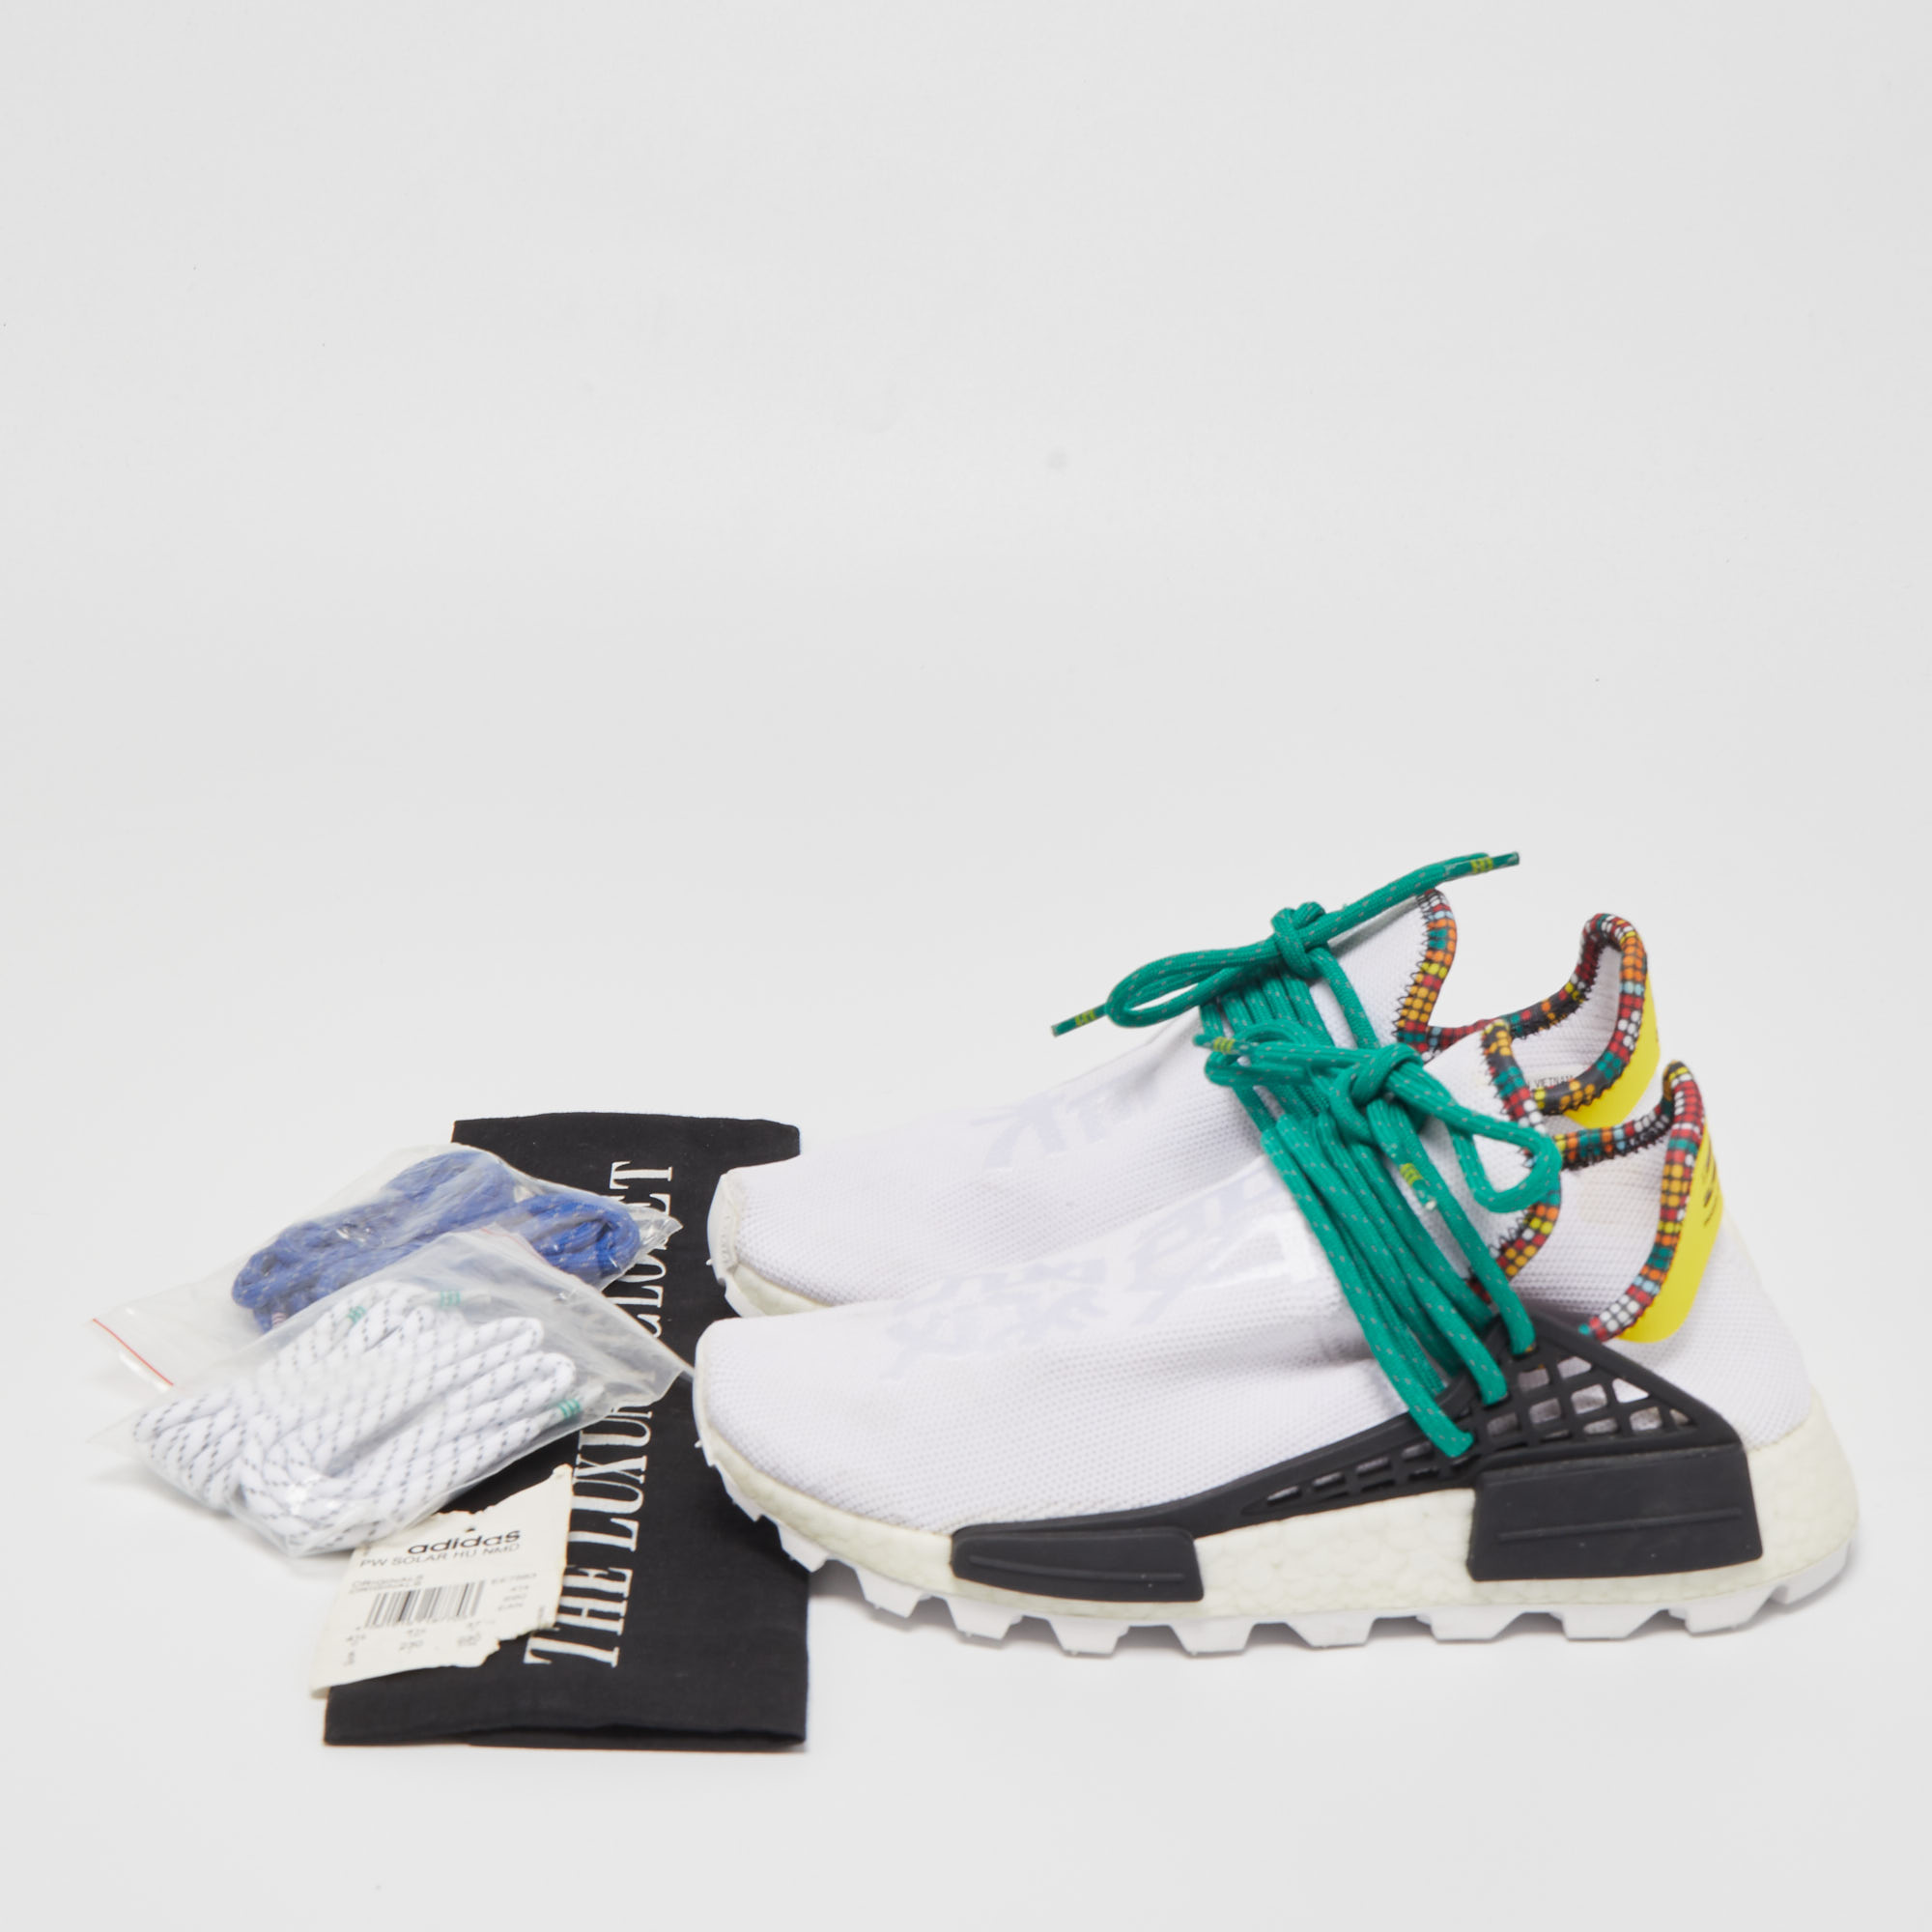 Pharrell Williams X Adidas White Fabric Human Body NMD Sneakers Size 37 1/3